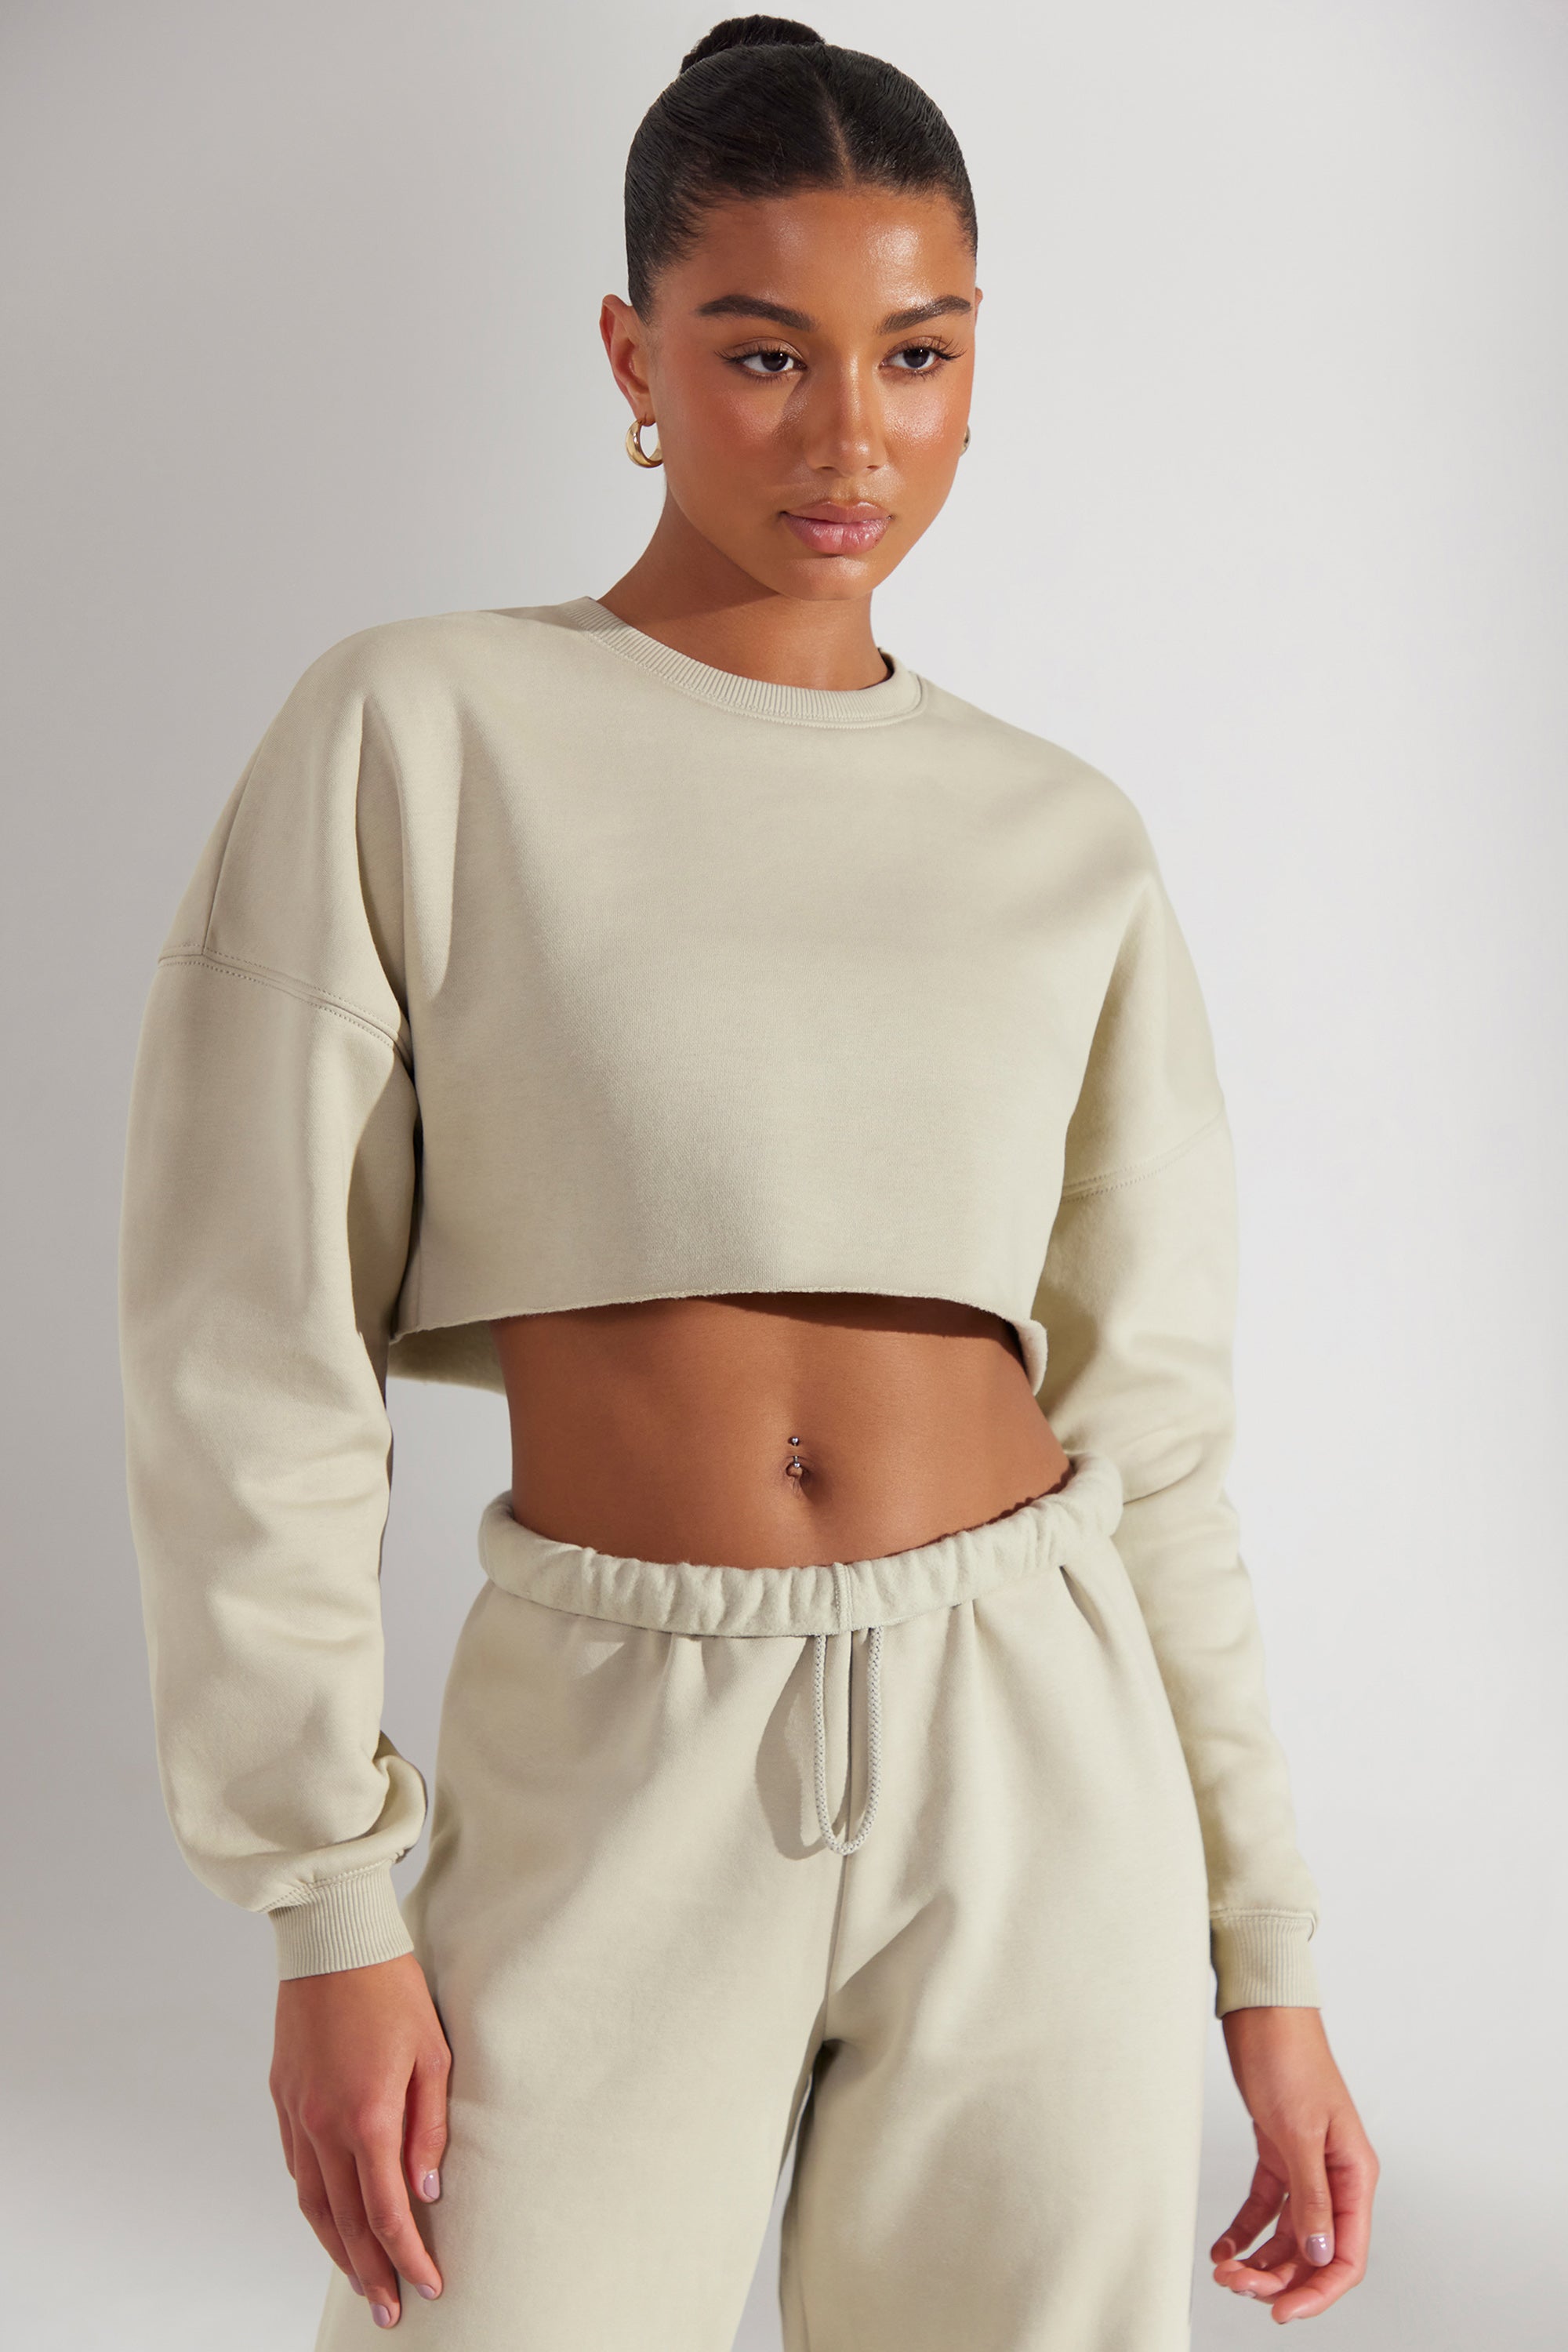 Flygo Crop Top Hoodies for Women Long Sleeve Pullover Super Cropped Hoodie  Sweat